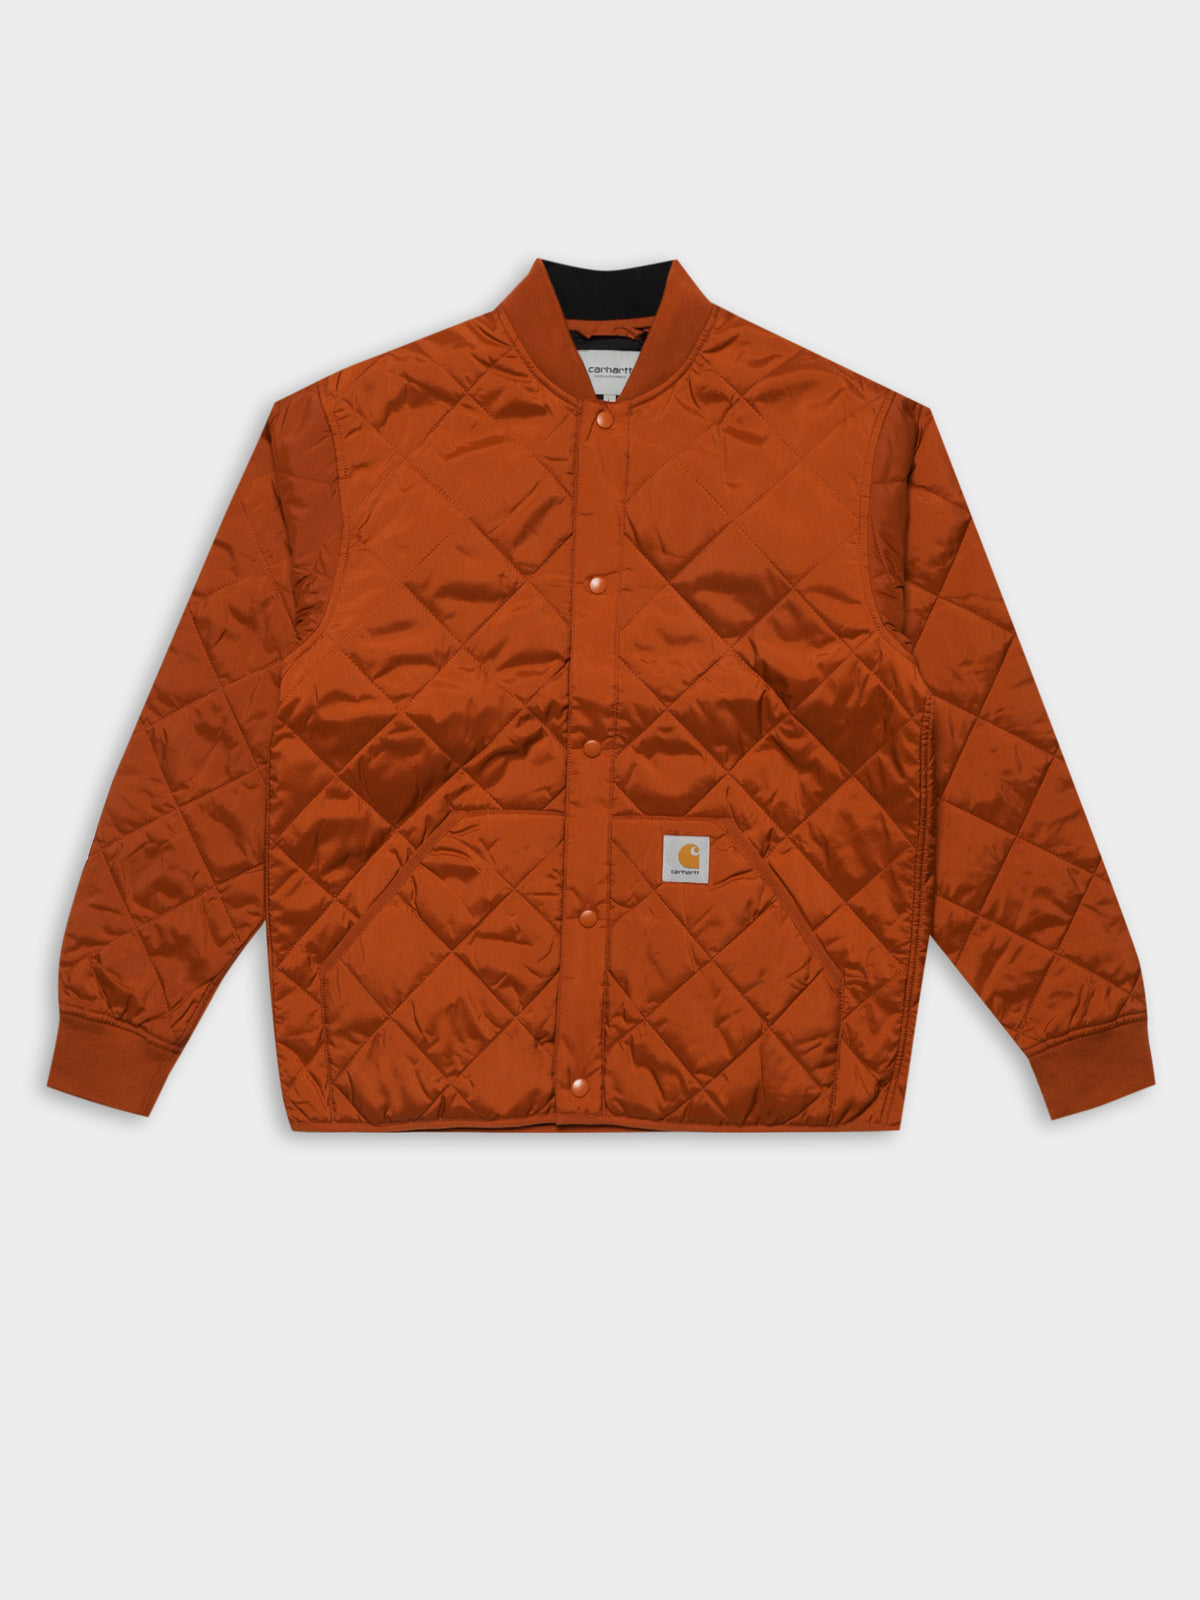 Barrow Liner Jacket in Copperton Orange